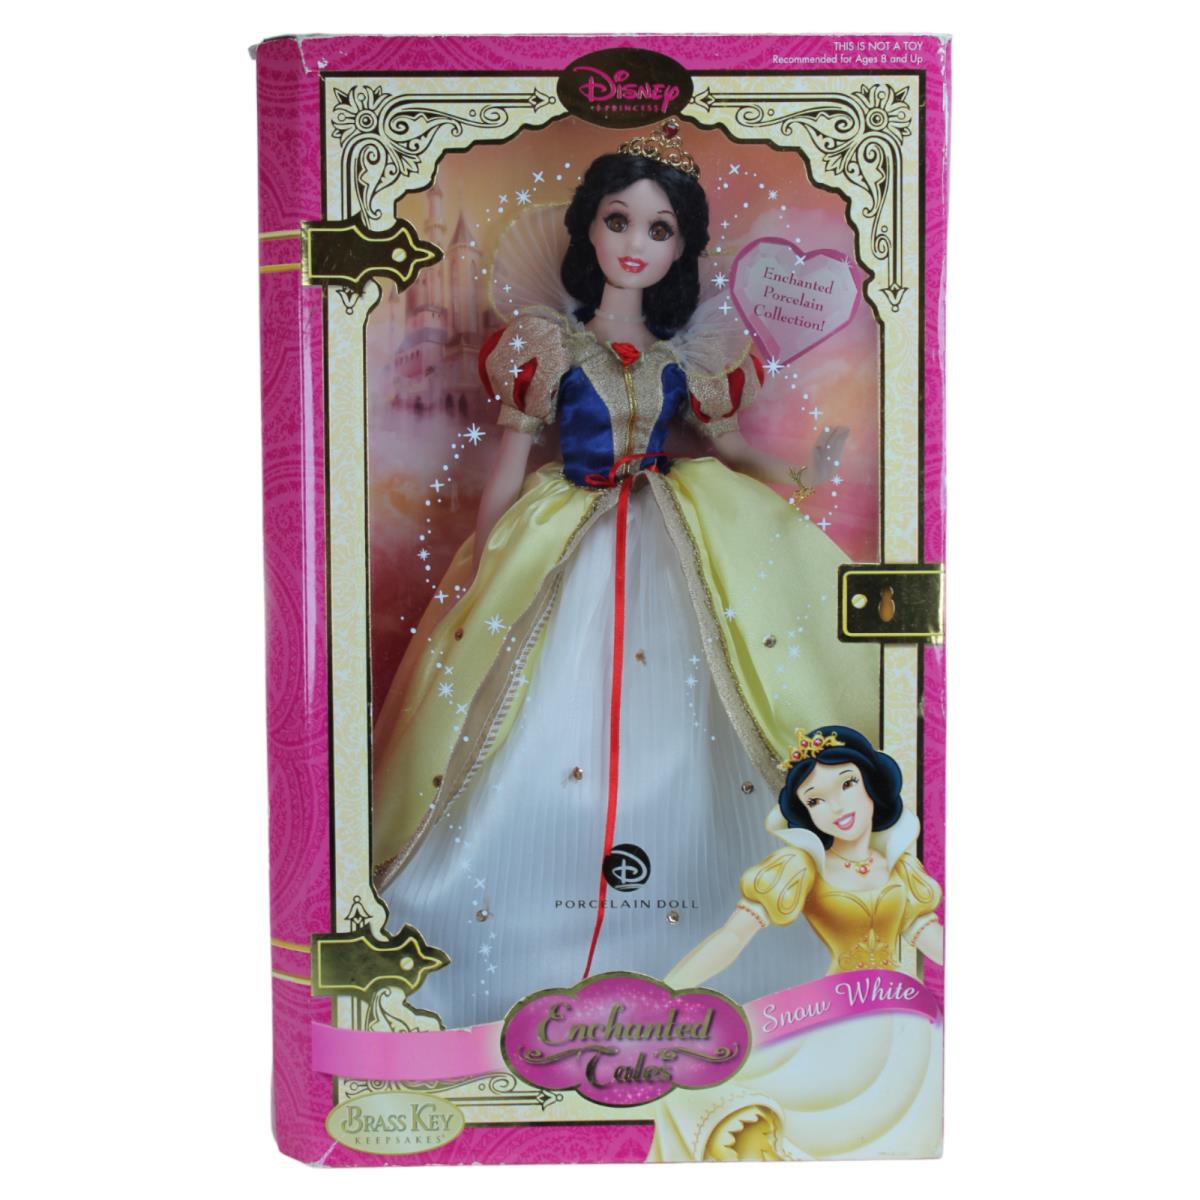 Disney Princess Enchanted Tales Snow White Porcelain Doll 2007